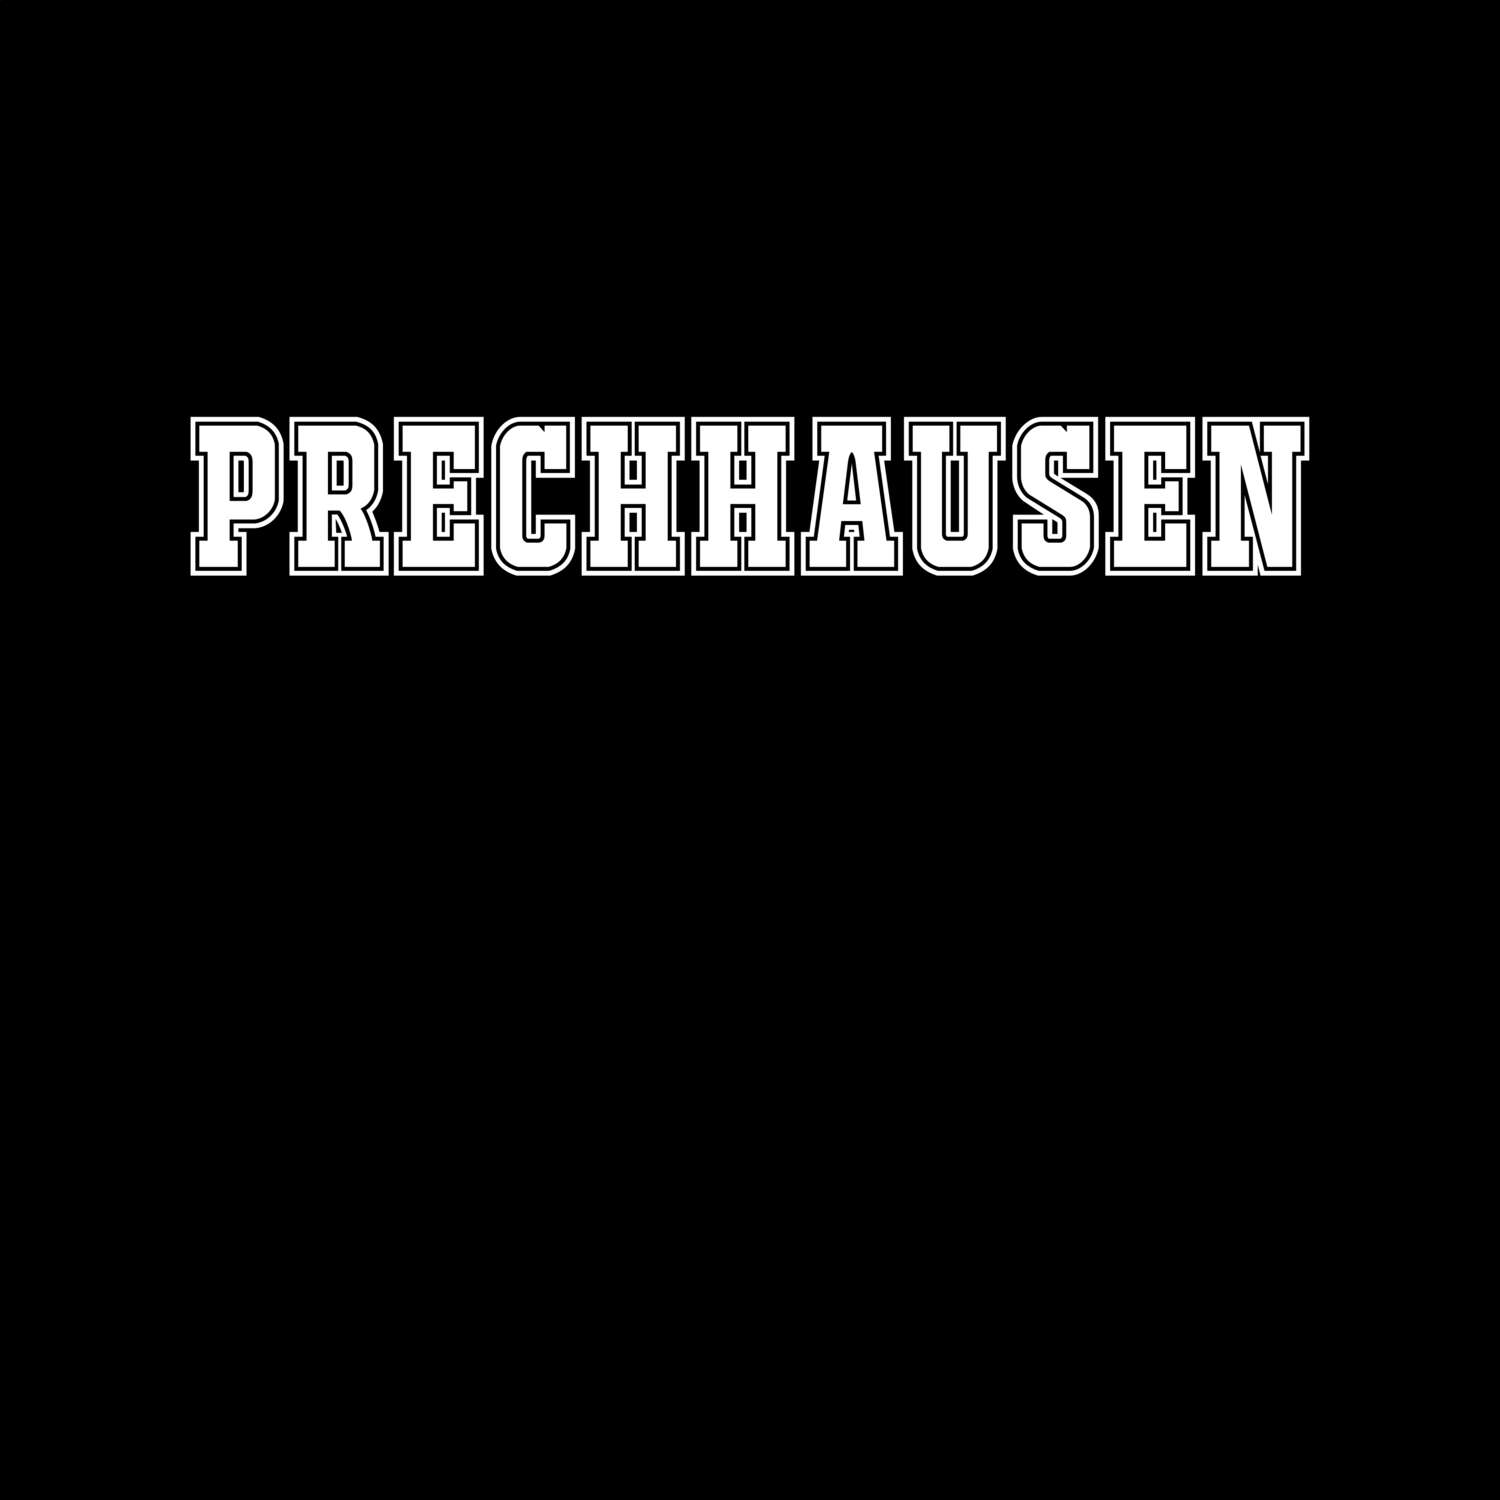 Prechhausen T-Shirt »Classic«